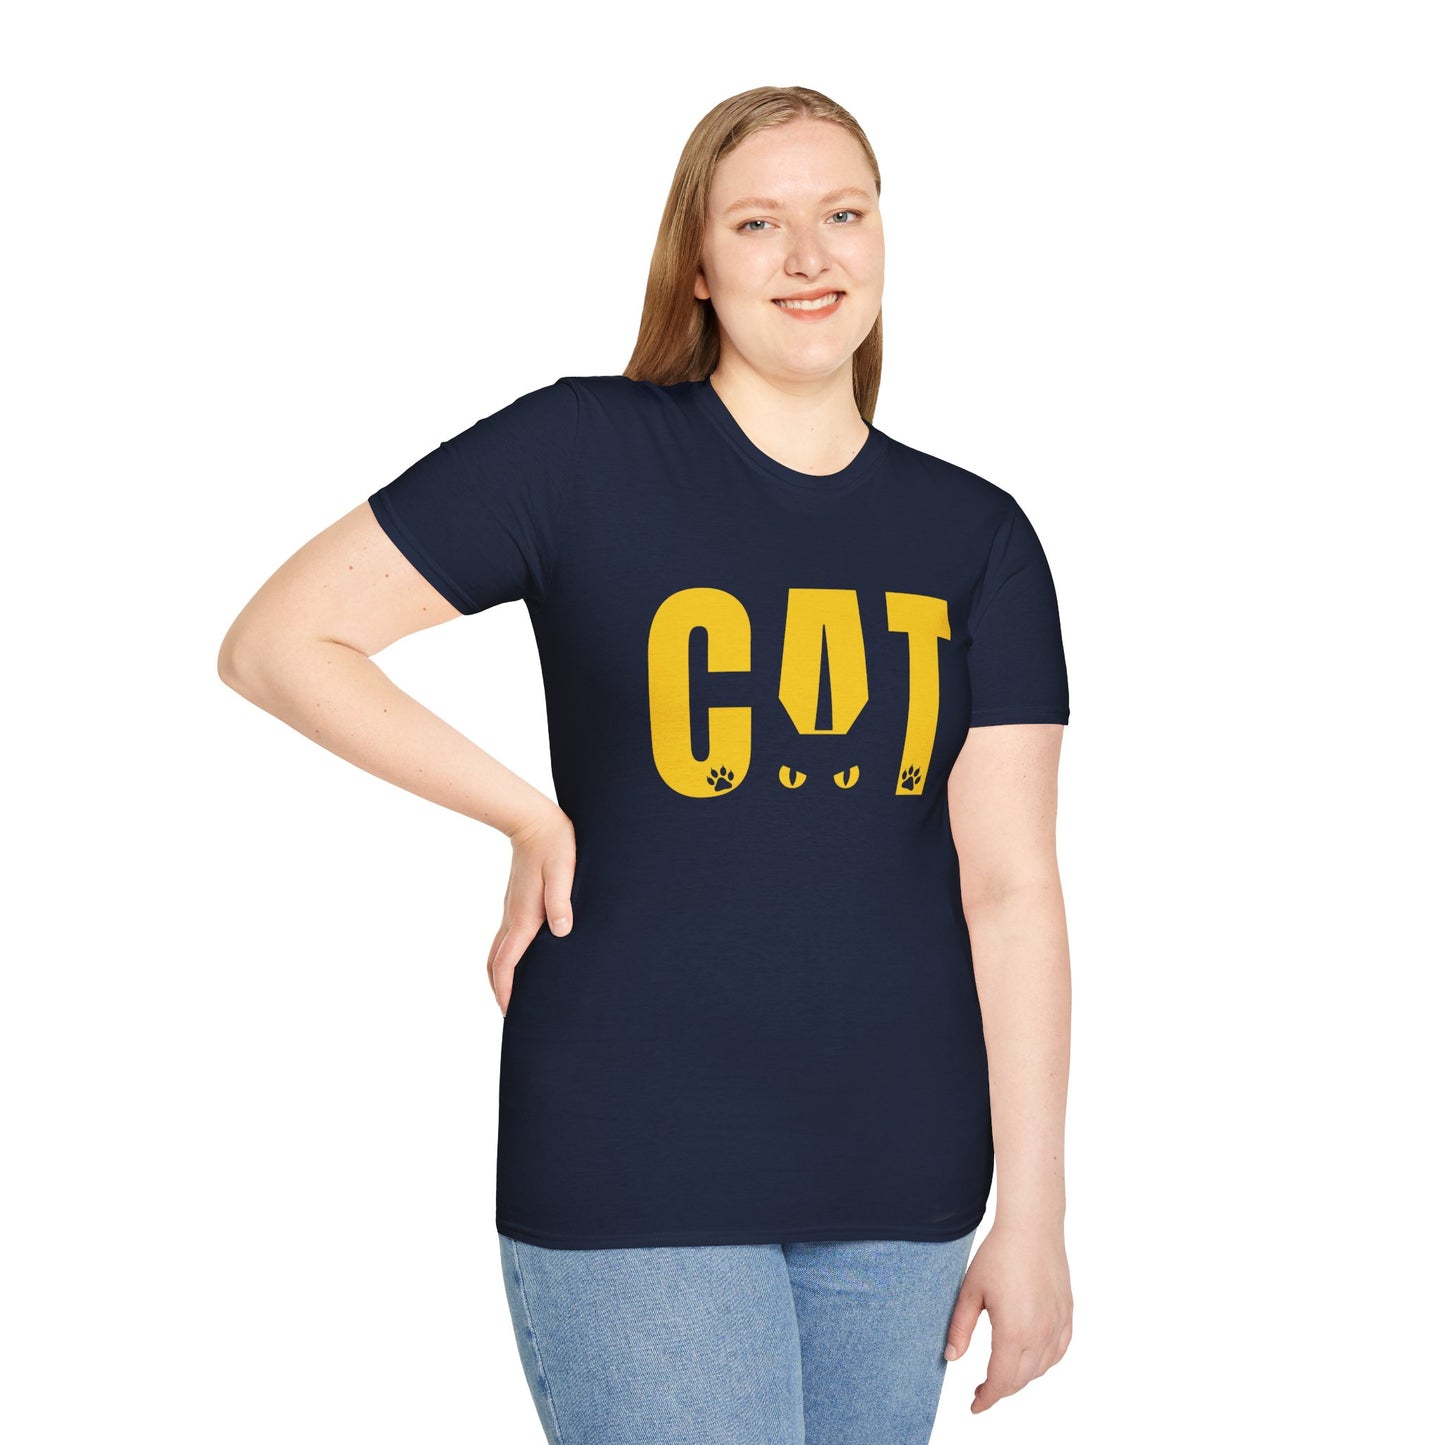 Cat Shirt - Unisex - Softstyle T-Shirt